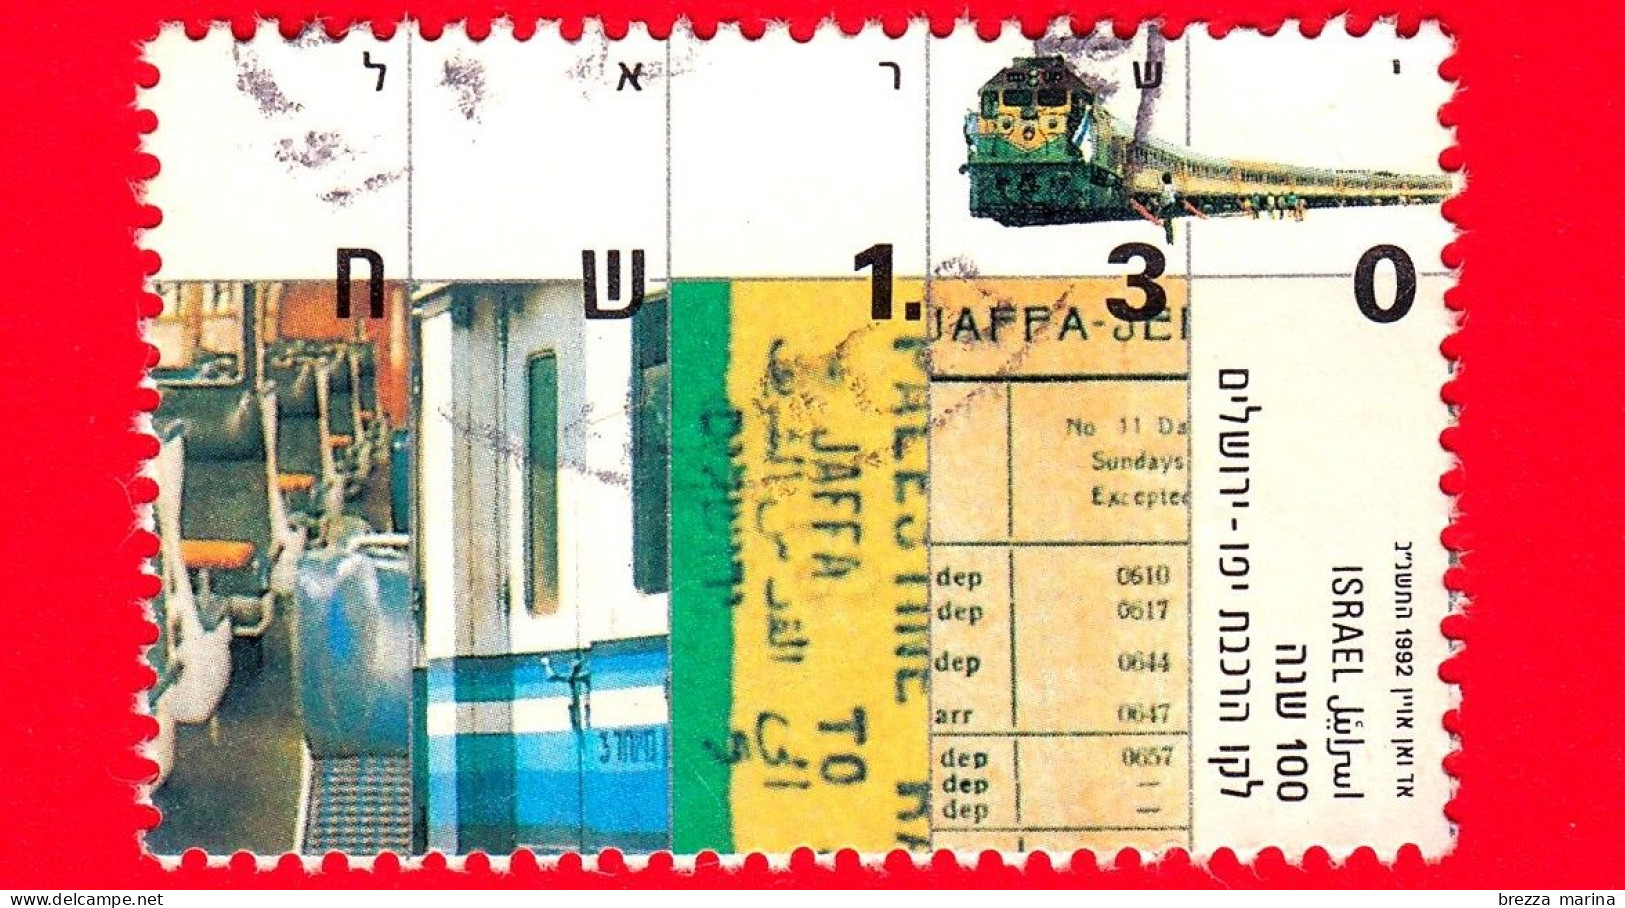 ISRAELE - Usato - 1992 - Centenario Della Linea Ferroviaria Jaffa-Gerusalemme - Locomotiva Diesel - 1.30 - Gebruikt (zonder Tabs)